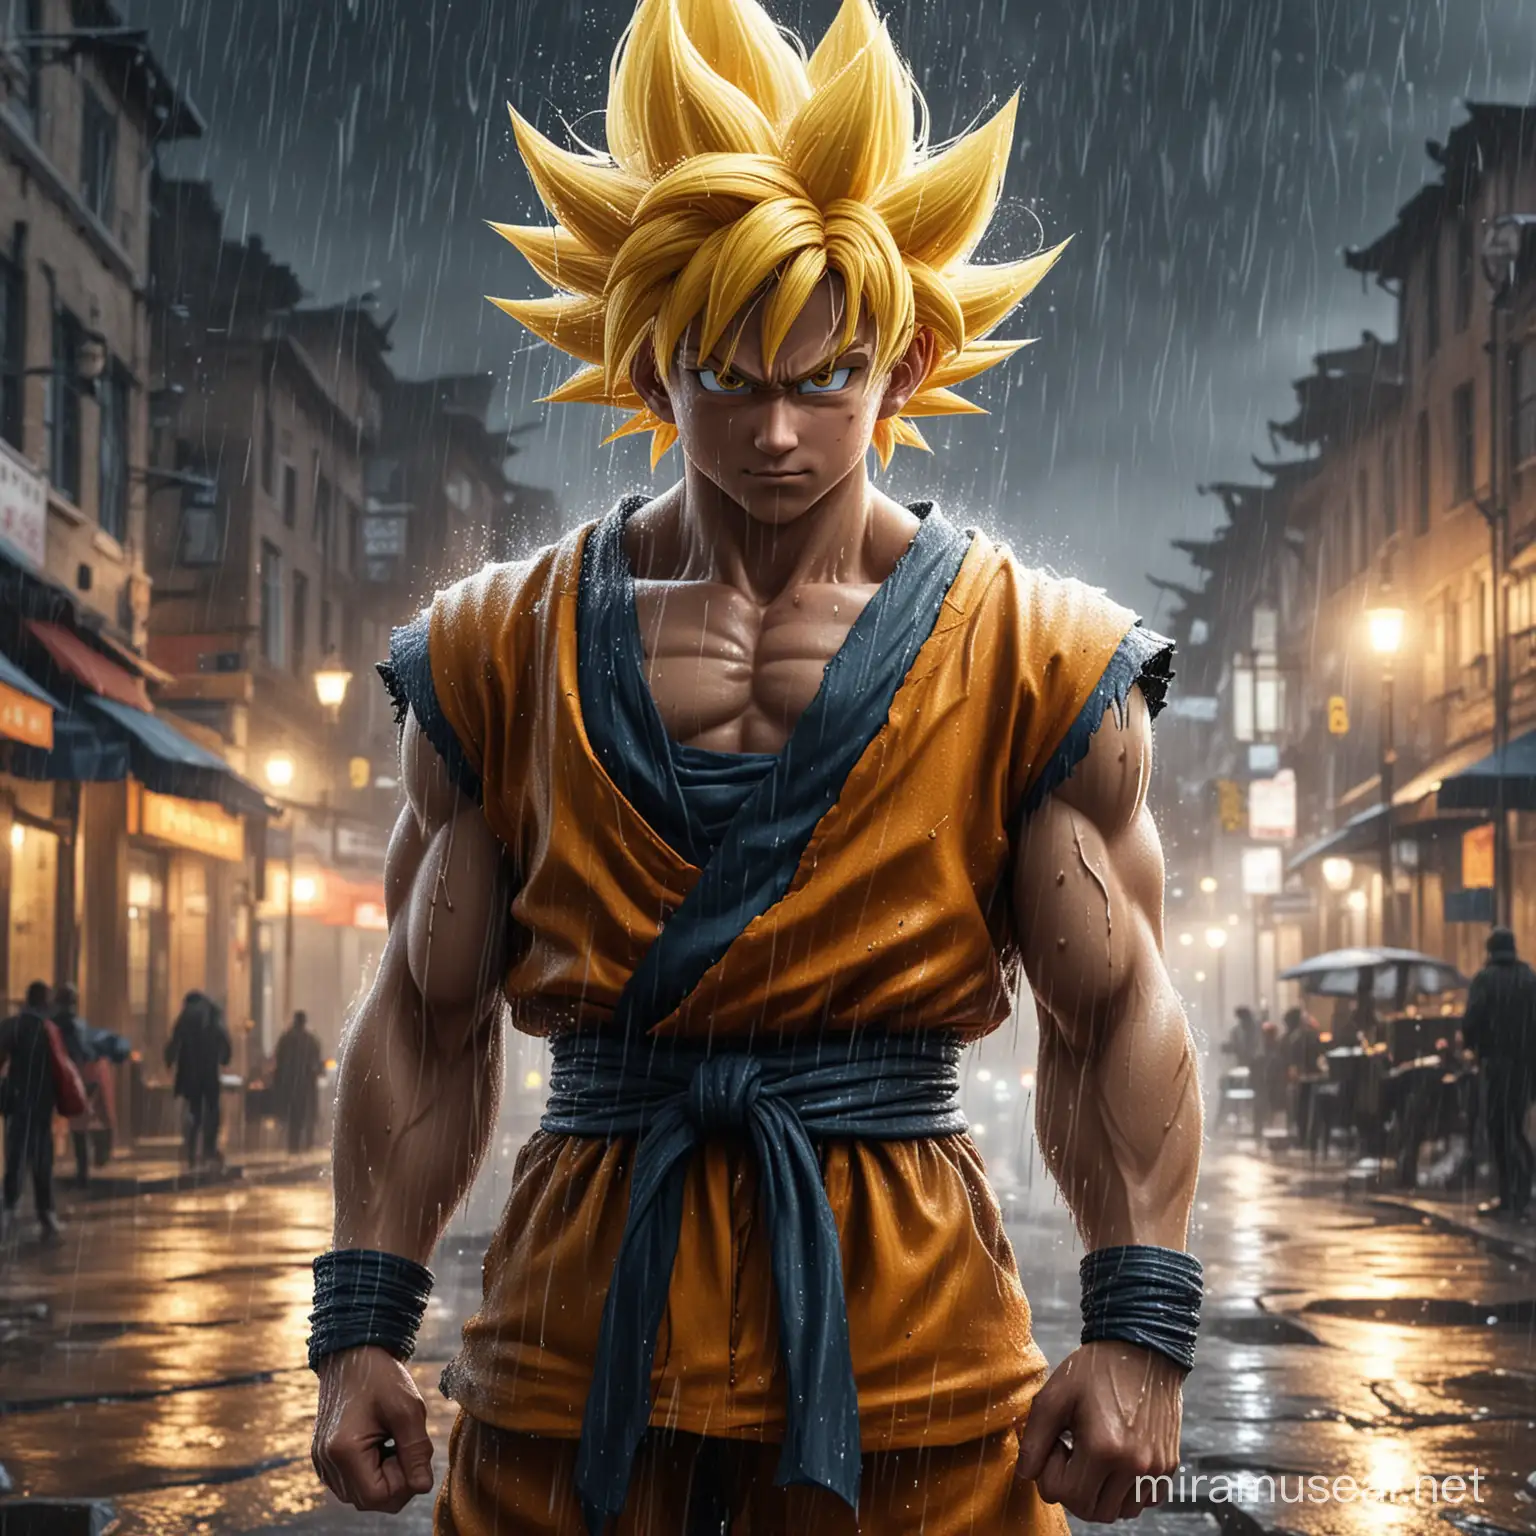 Goku dragon ball berukuran besar berambut yelow, latar belakang, kota lama, hujan deras, berpetir, detail, realistic, rumit, ultra hd 8k